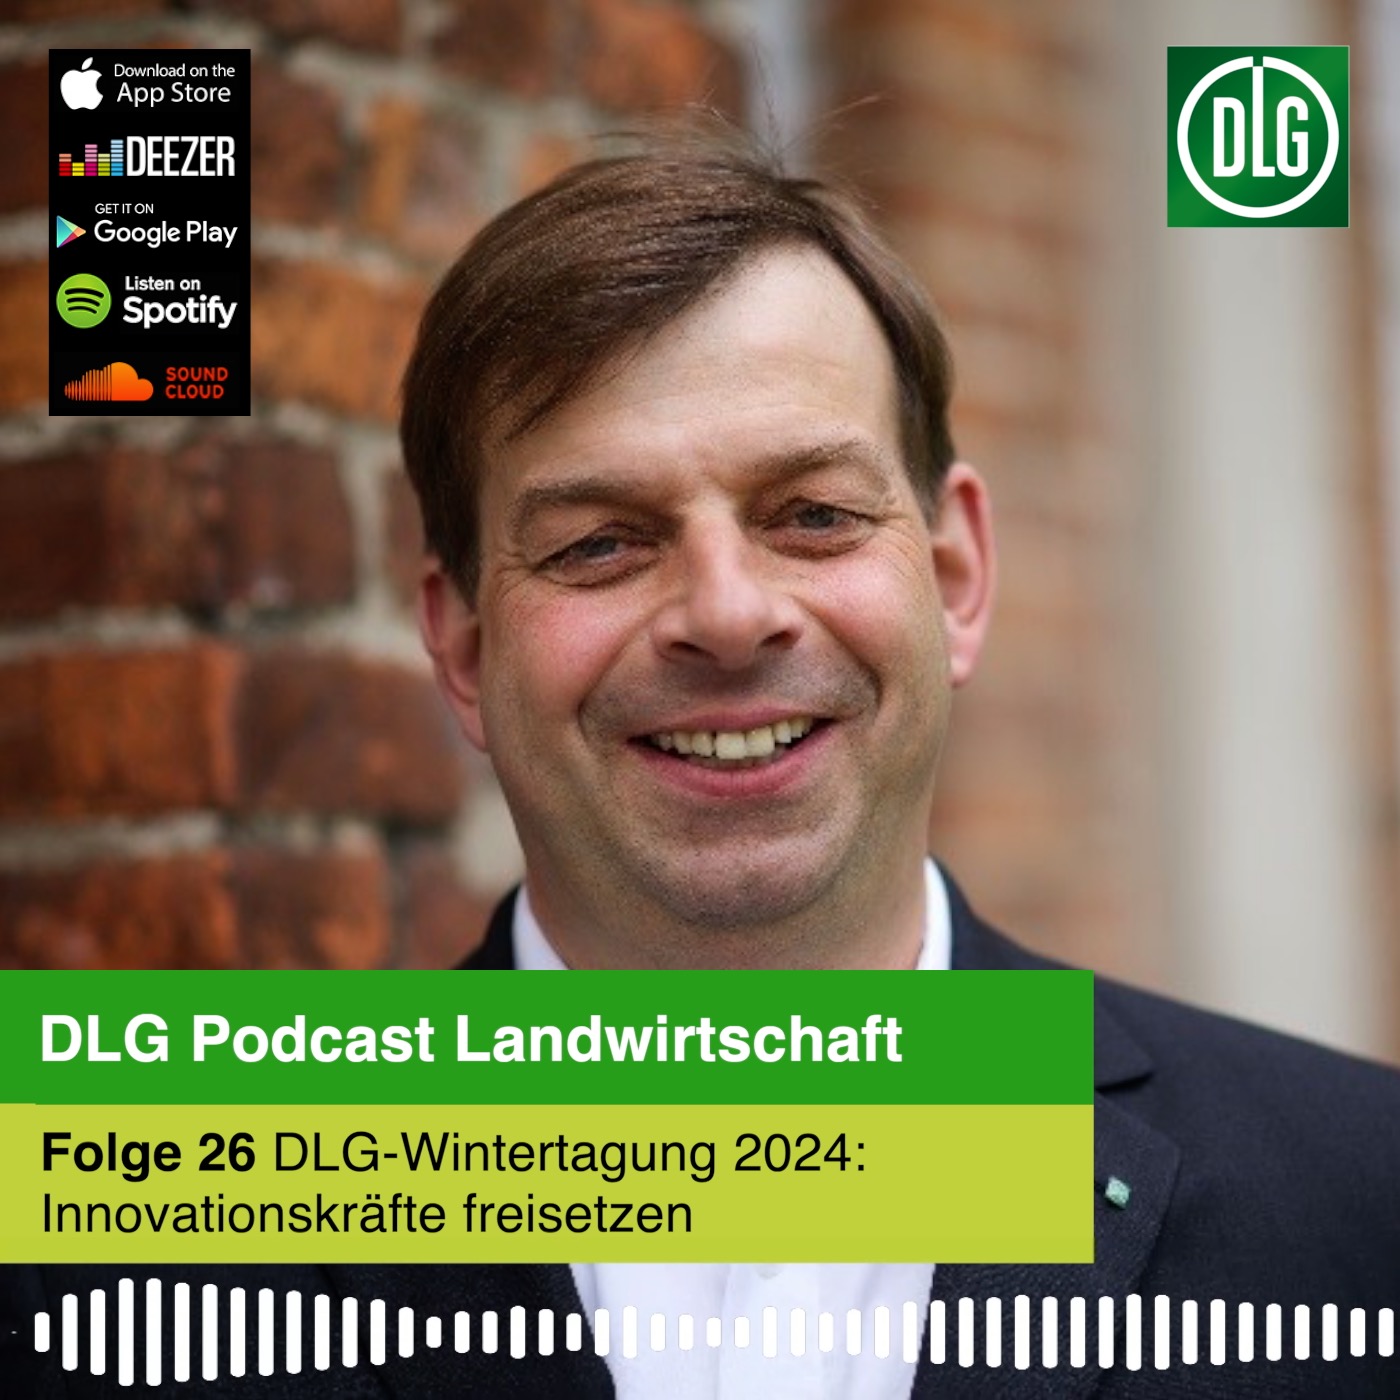 DLG-Präsident Hubertus Paetow im DLG-Podcast: "Innovationskräfte freisetzen"